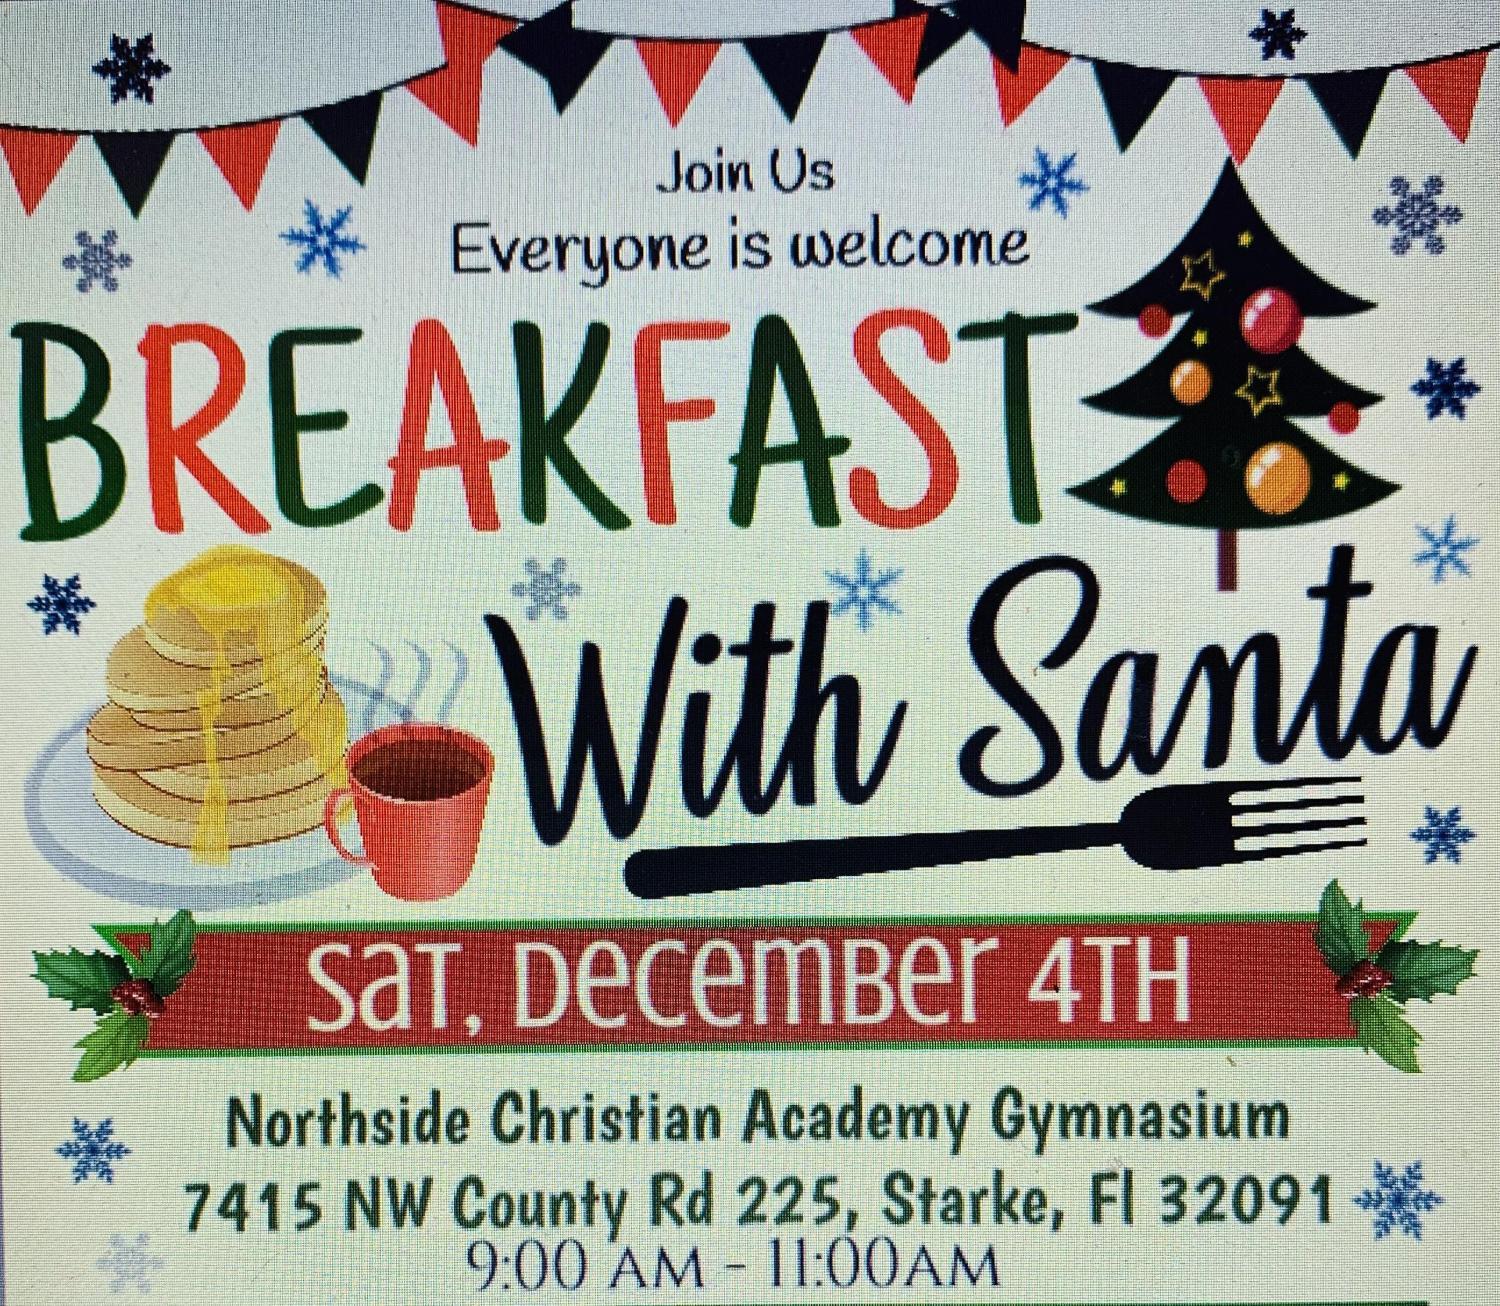 NCA Breakfast with Santa in North Central Florida